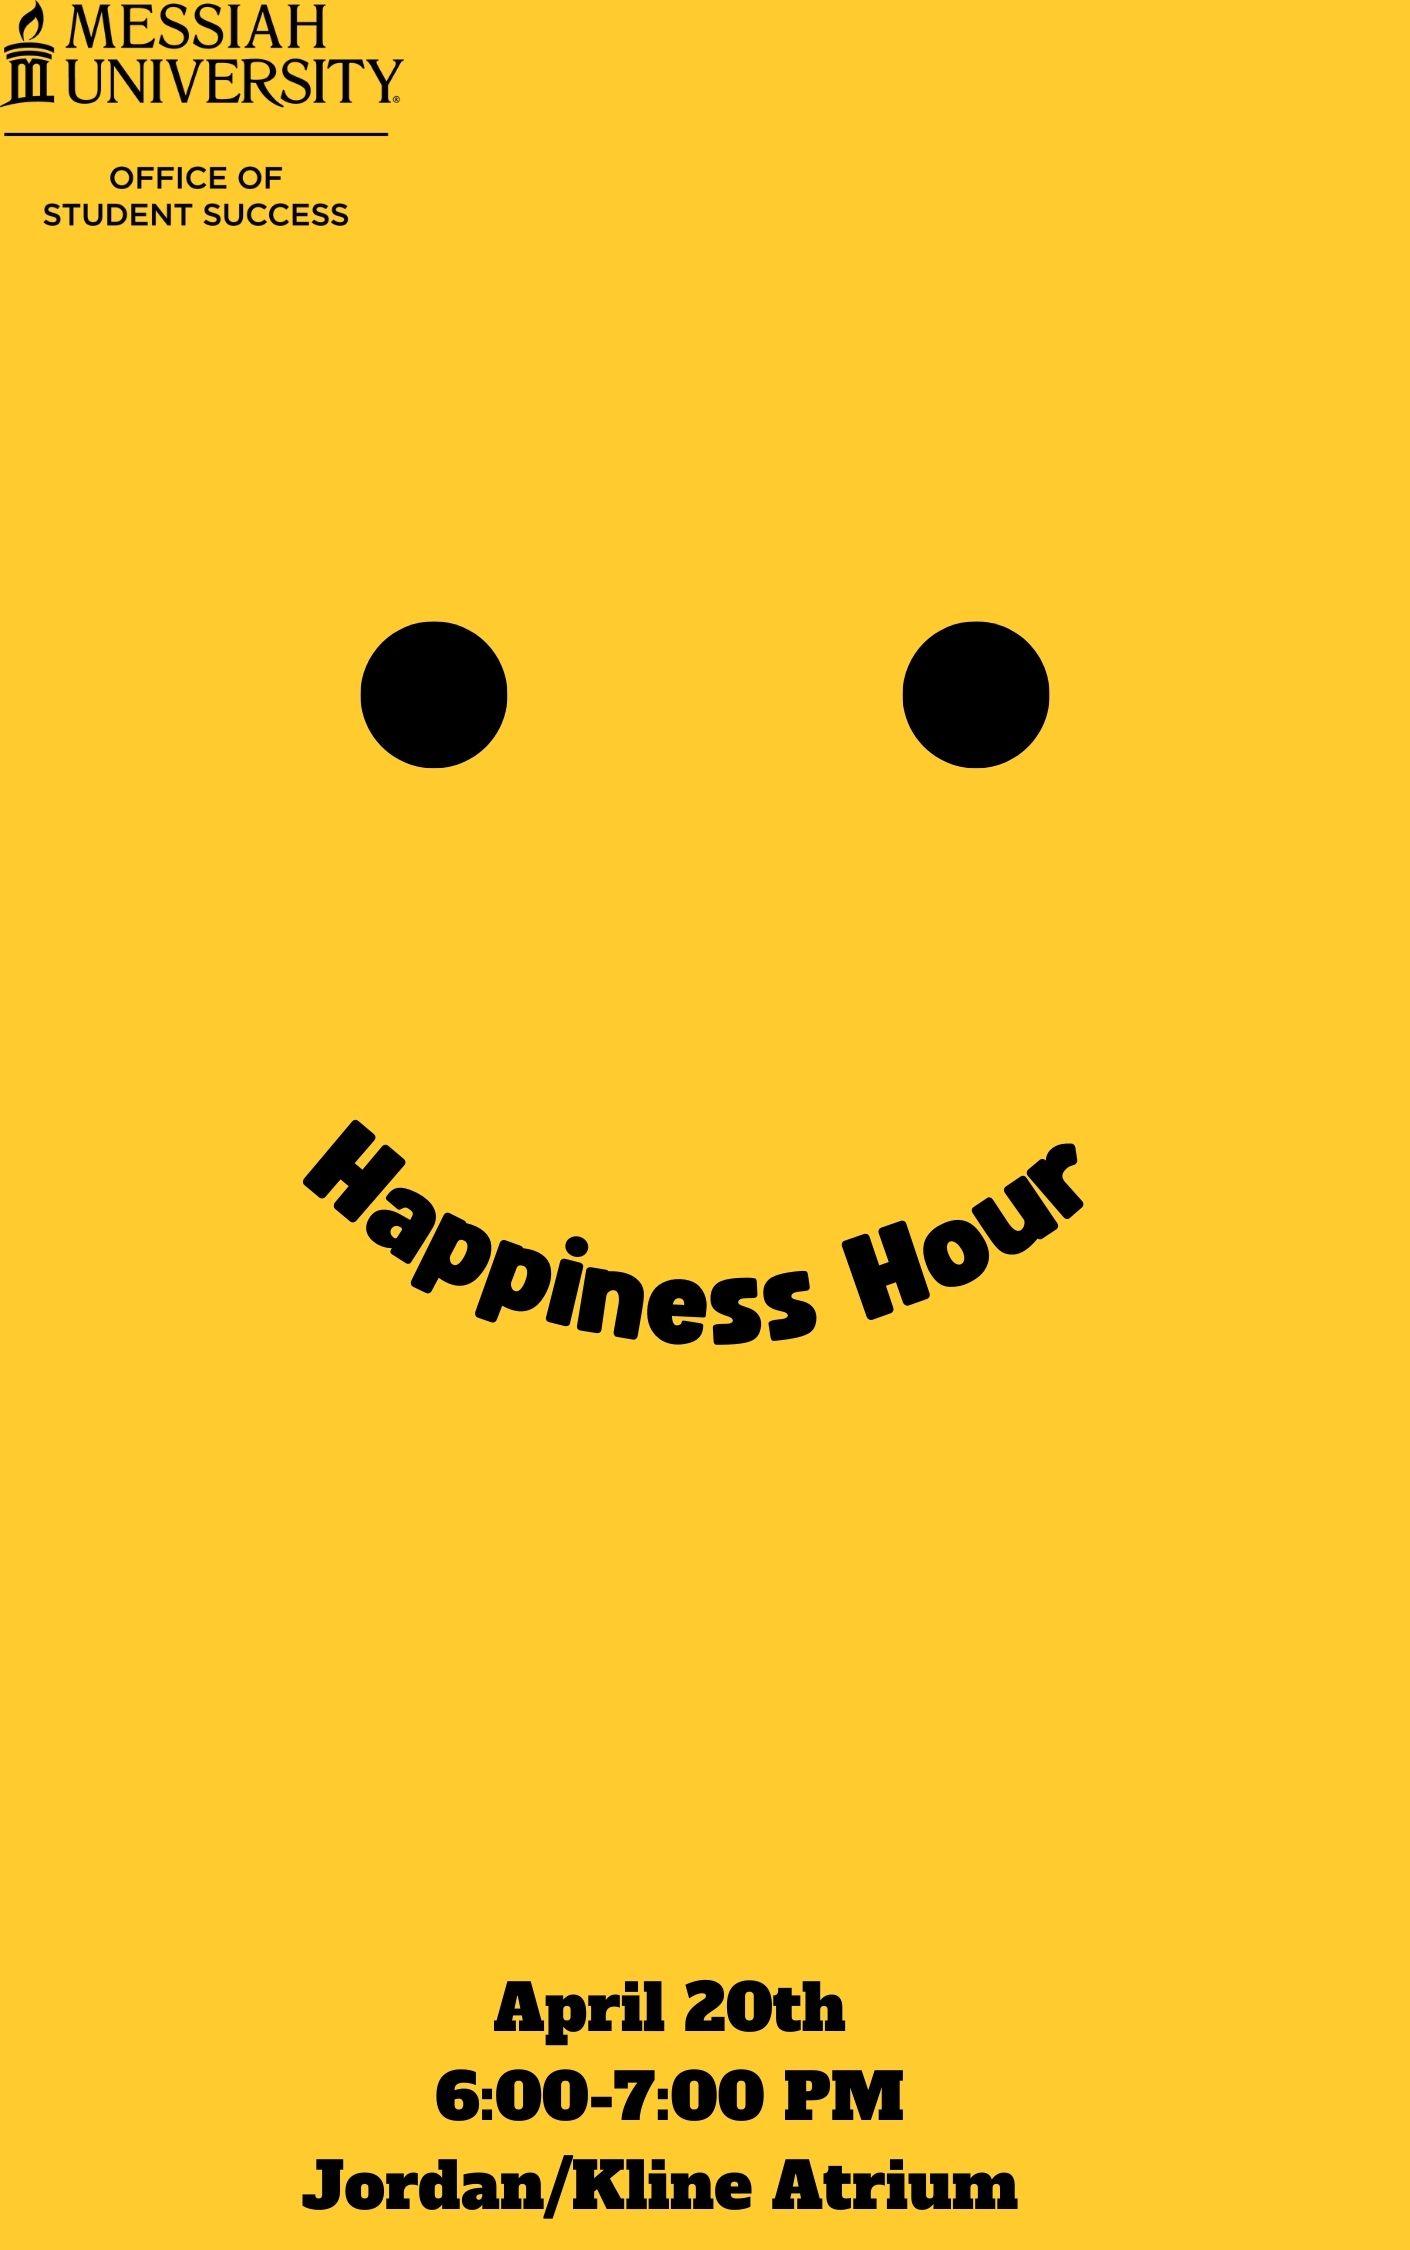 Happiness workshop